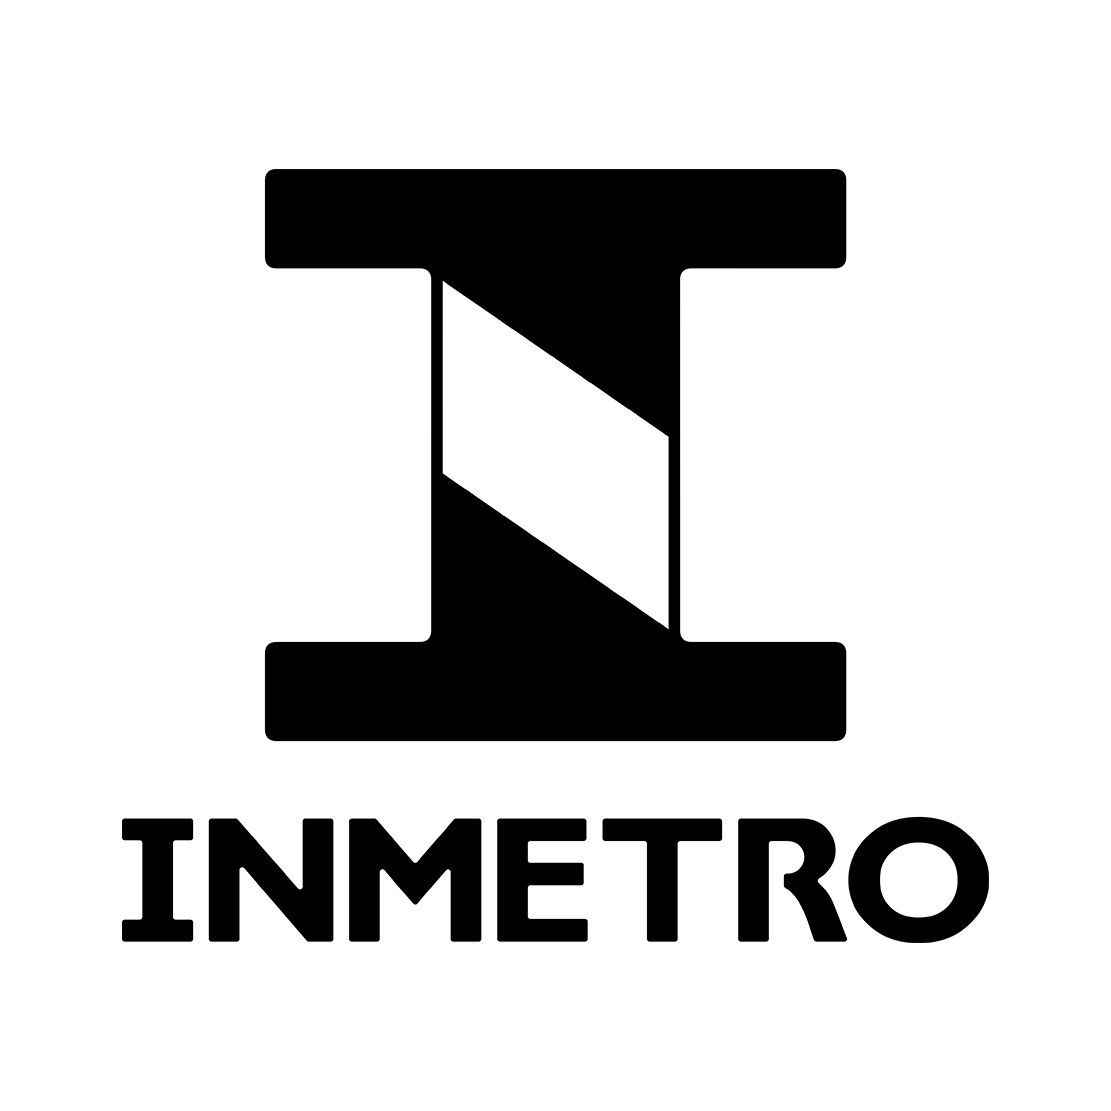 INMETRO Mark – Brazil